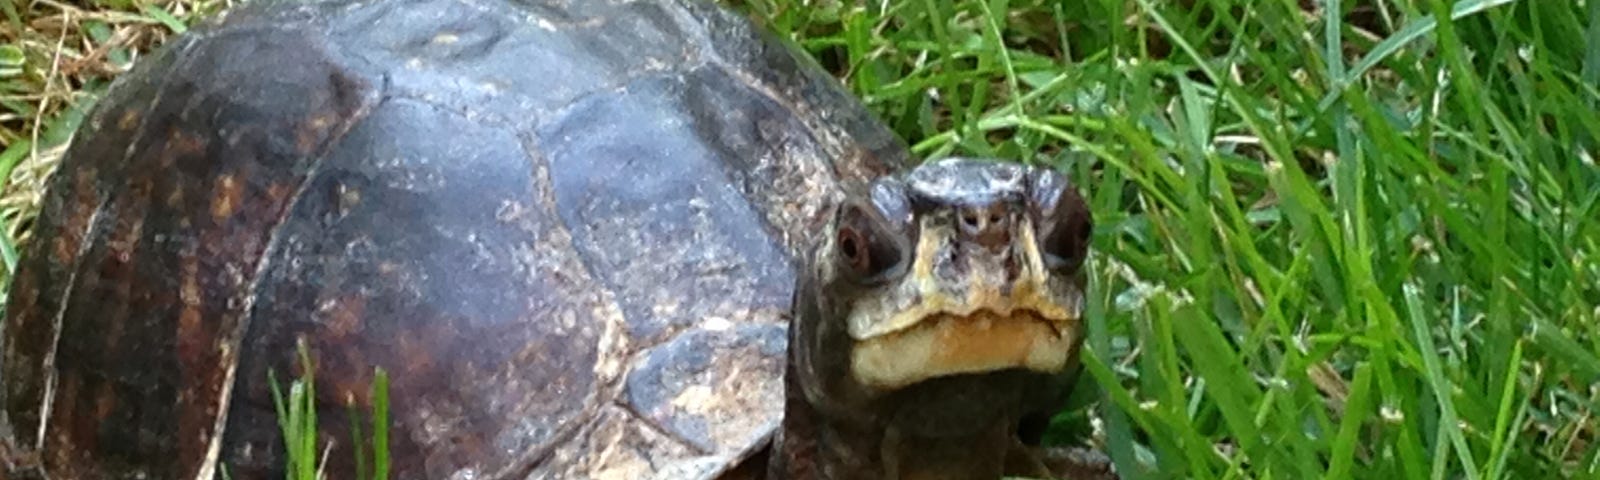 Beautiful brown box turtle in the grass